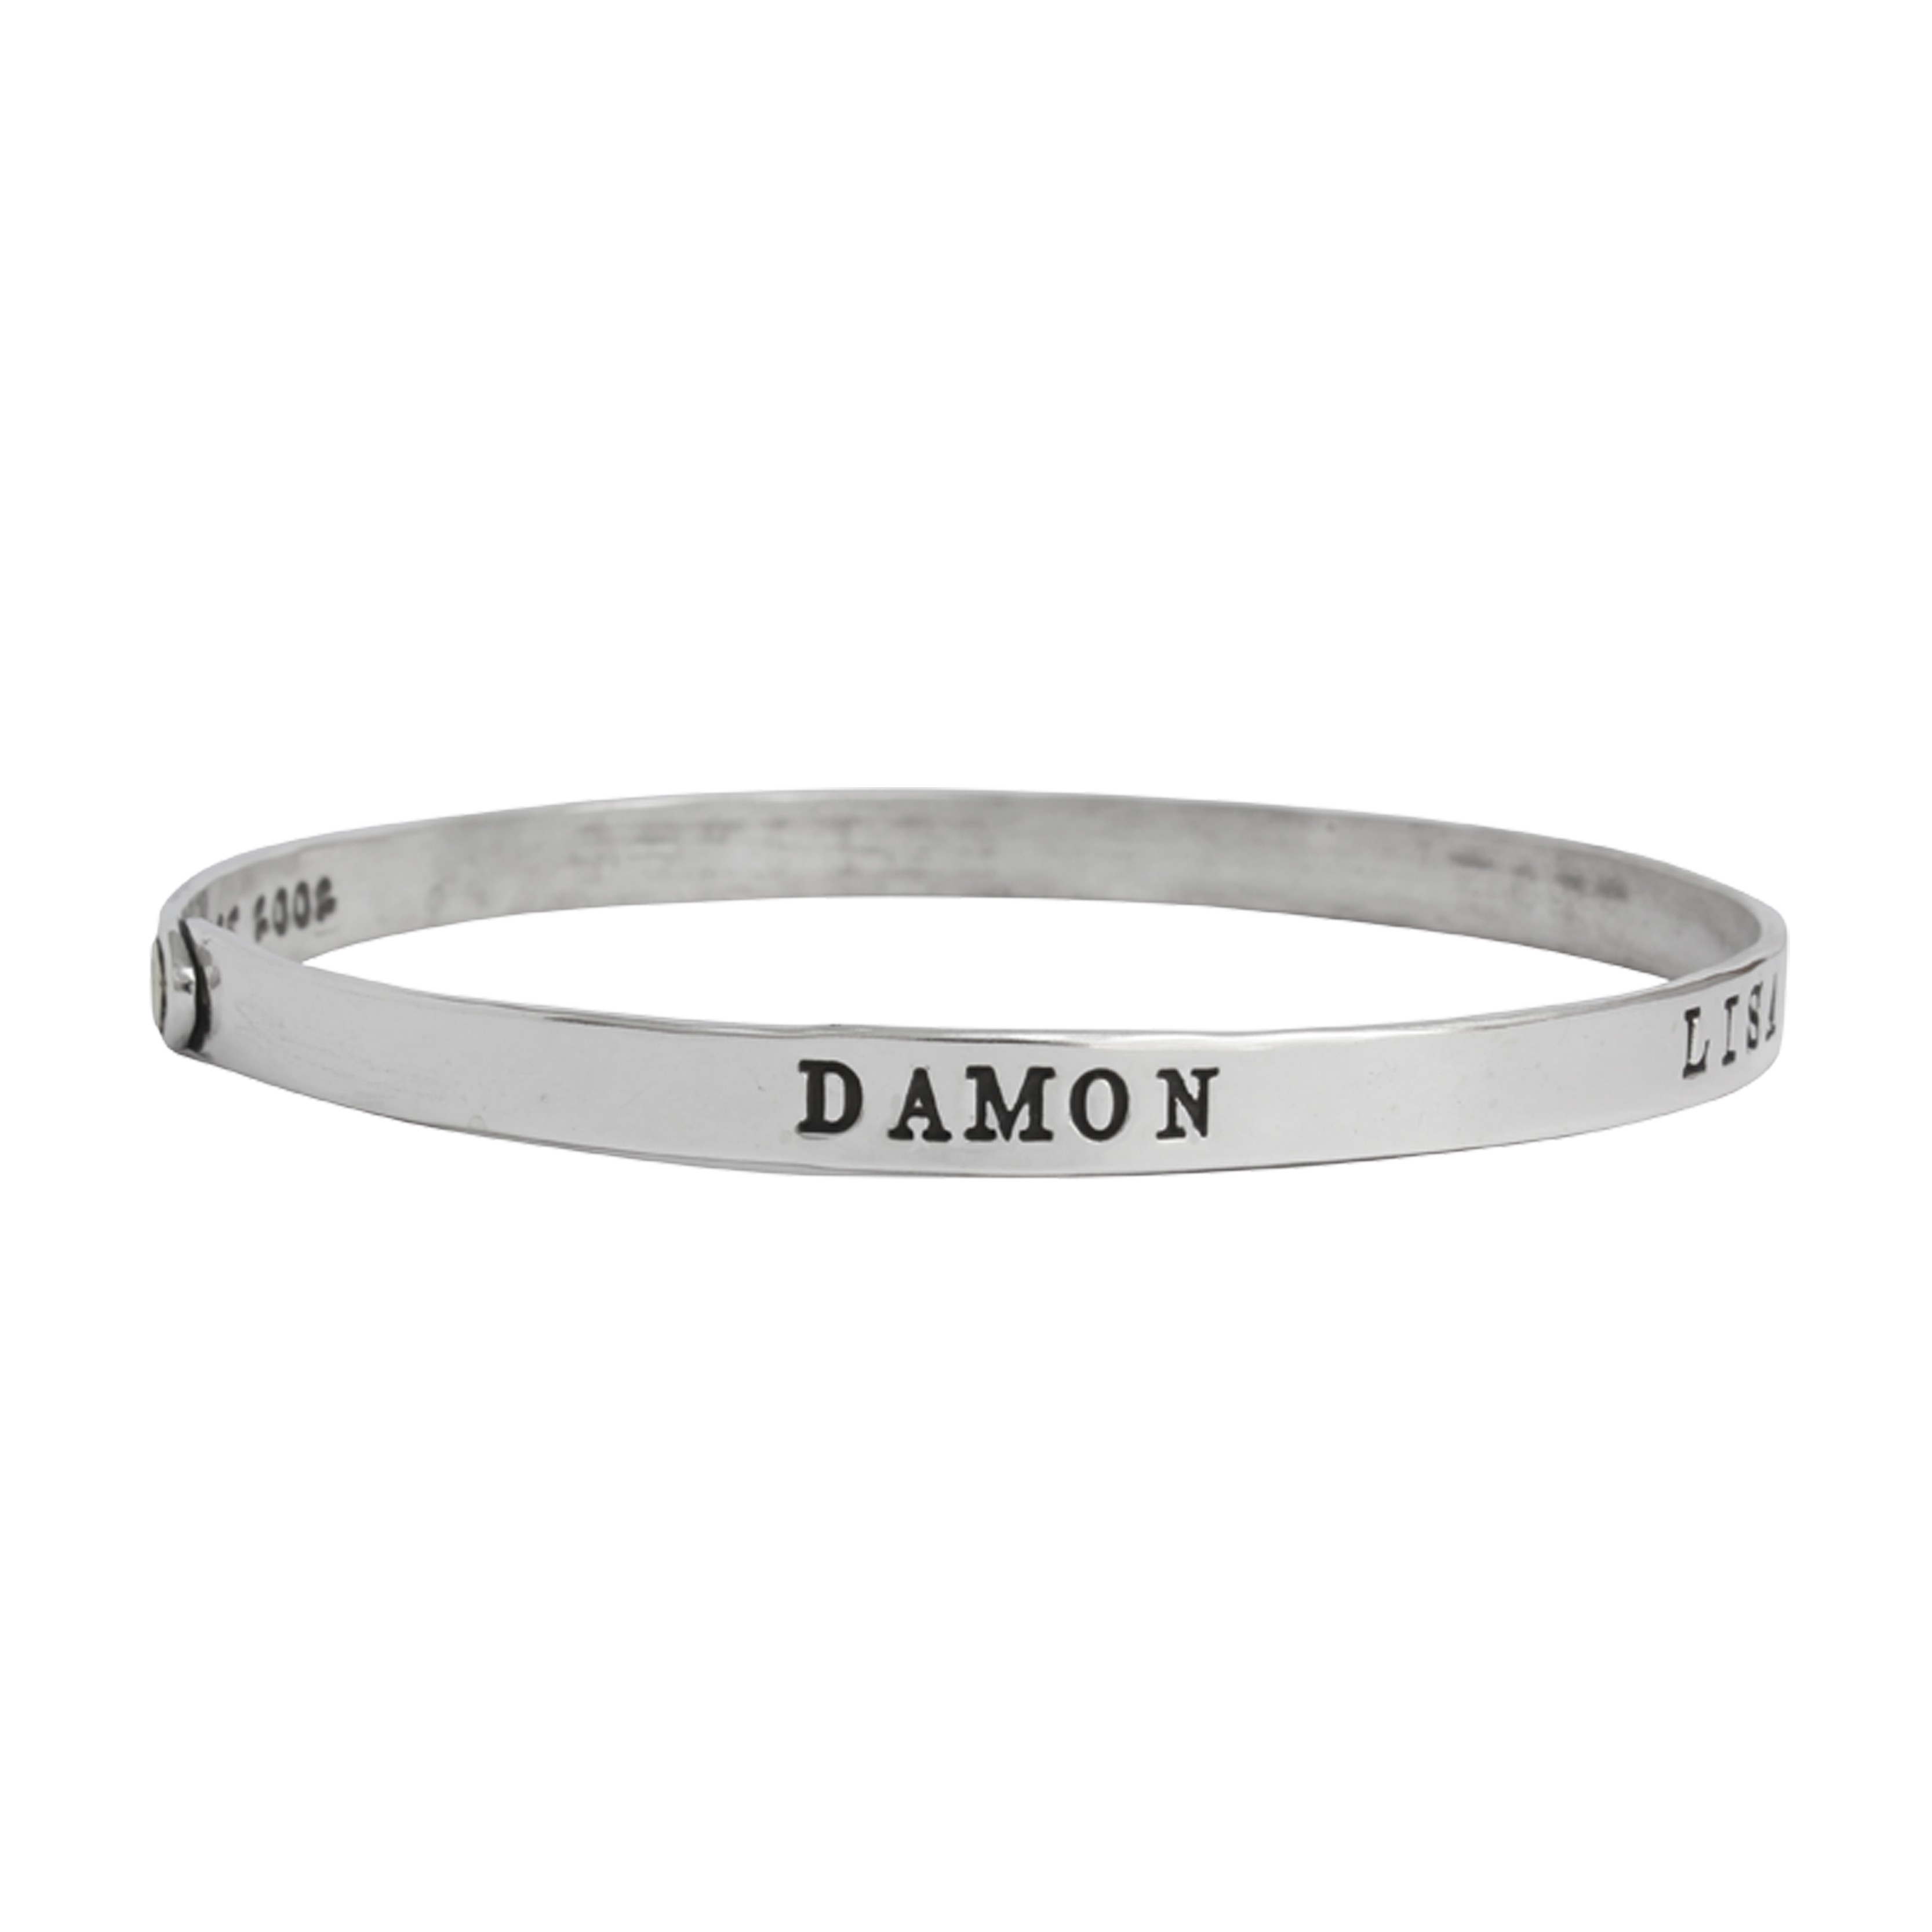 Personalized Bangle Bracelet Silver, Family Bracelet Personalized for ...